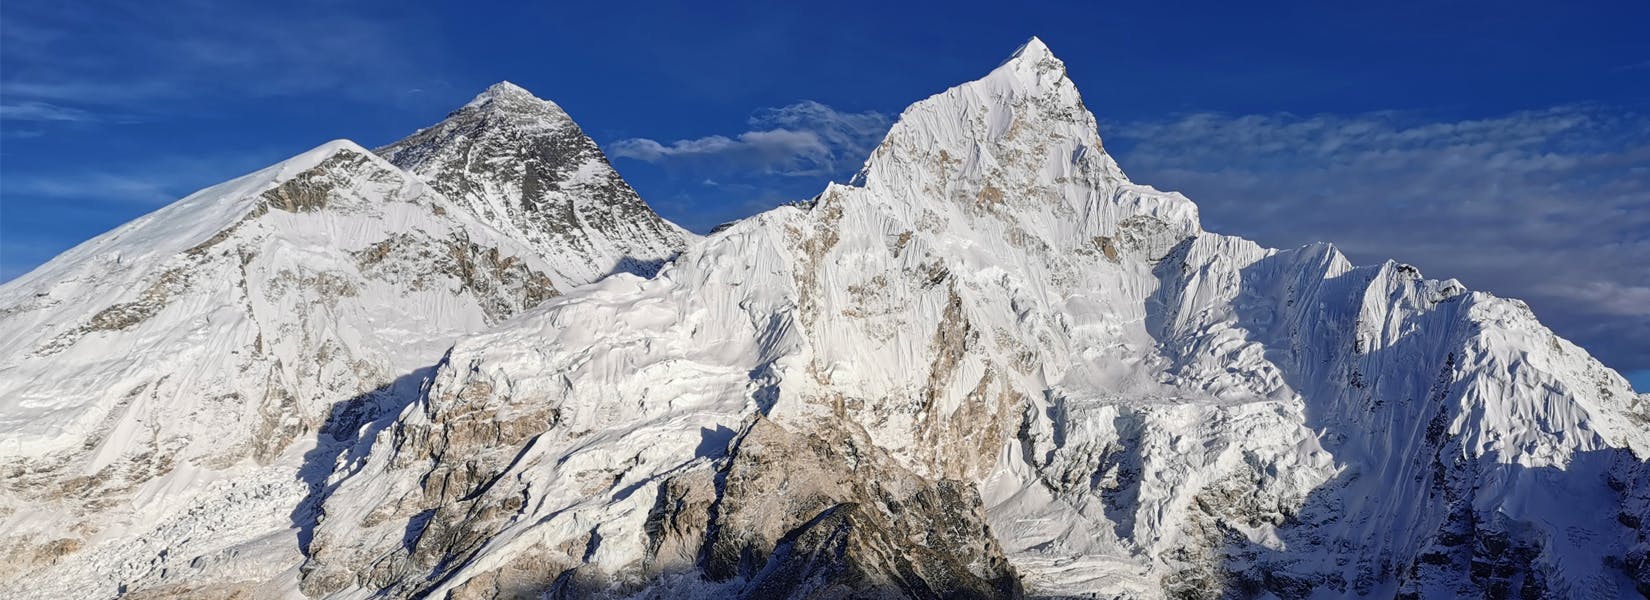 Everest View Yoga Trek - <span class="font-light">10 days</span>